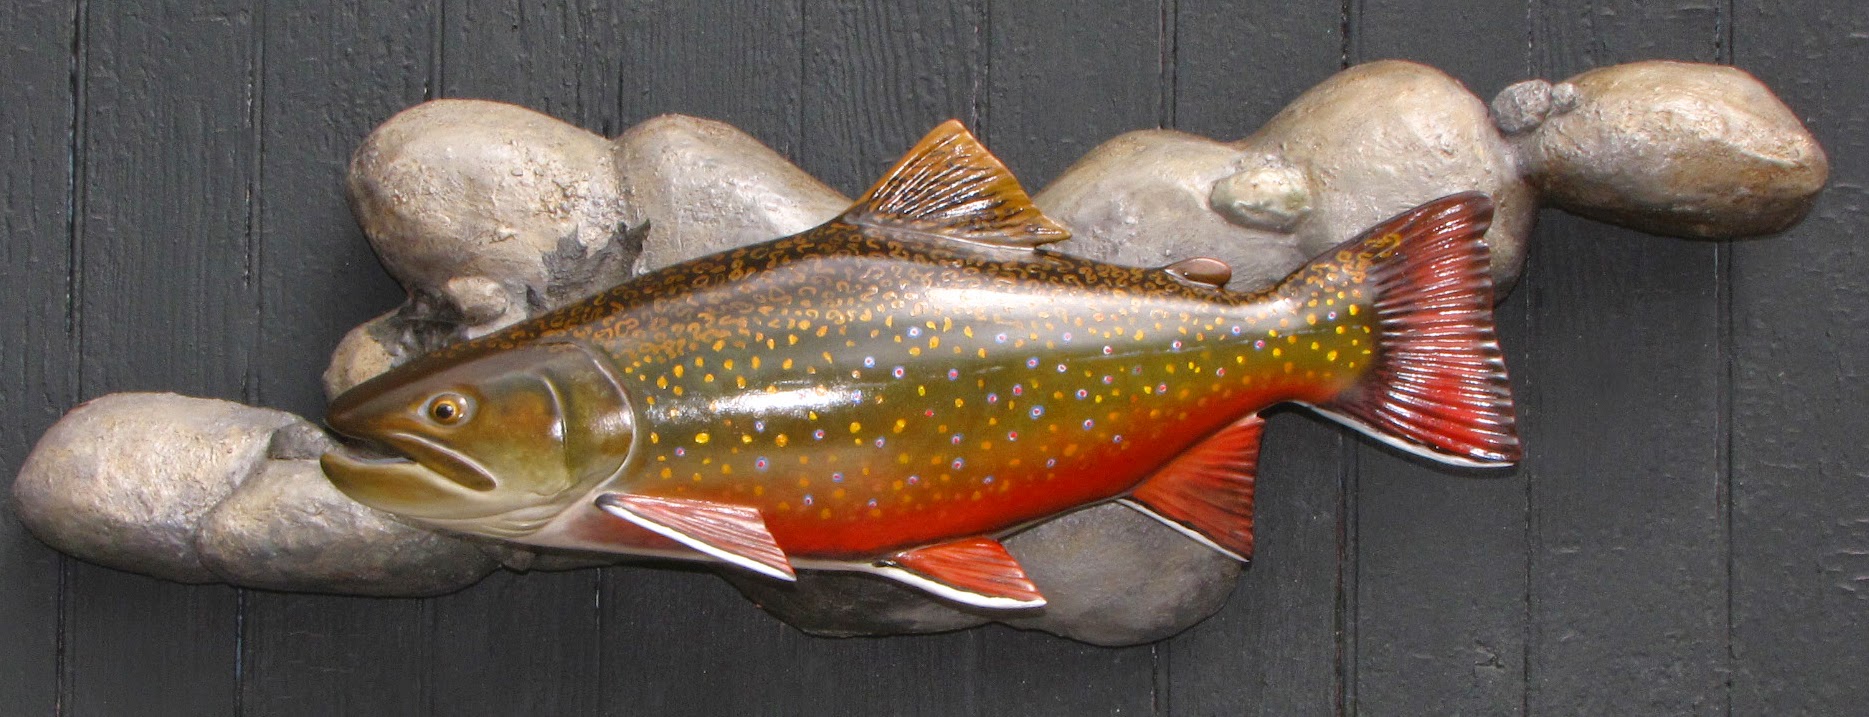 carved fish trophy